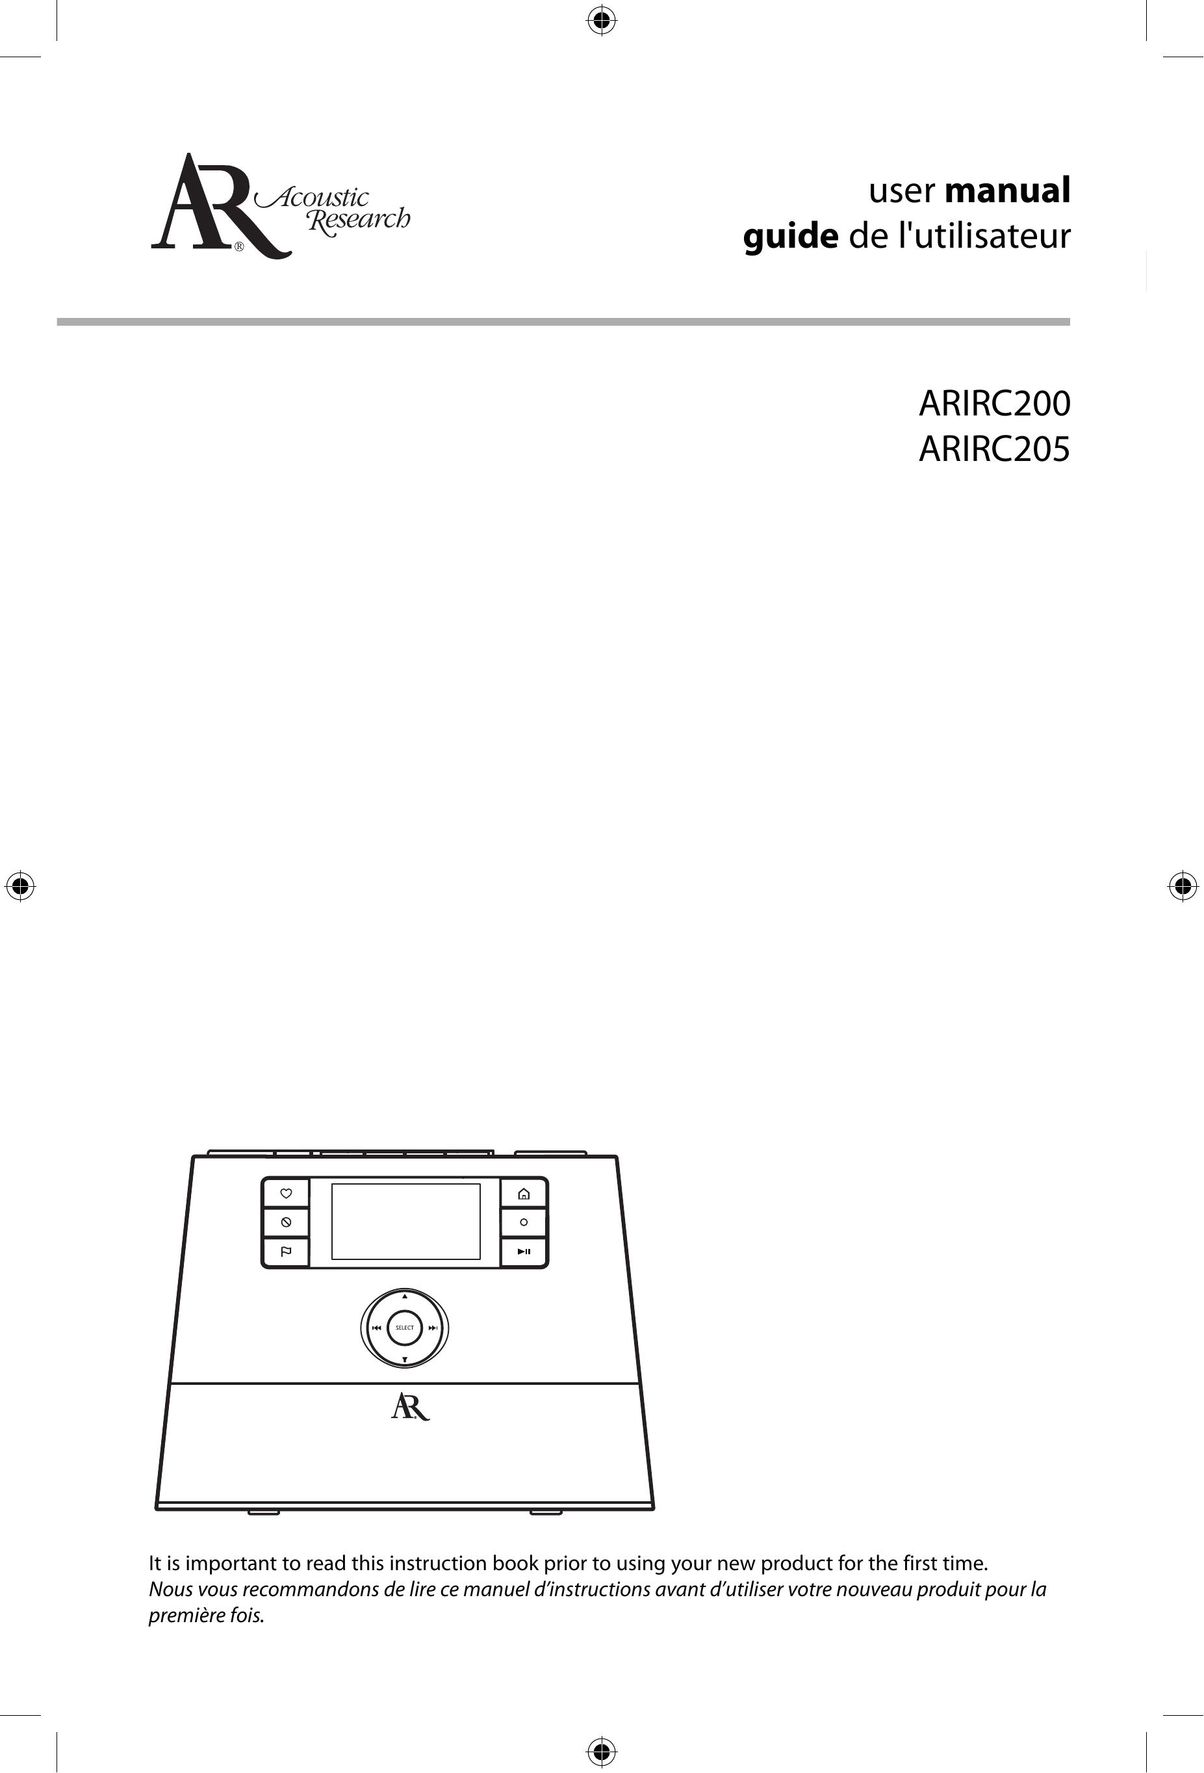 Acoustic Research ARIRC205 Radio User Manual